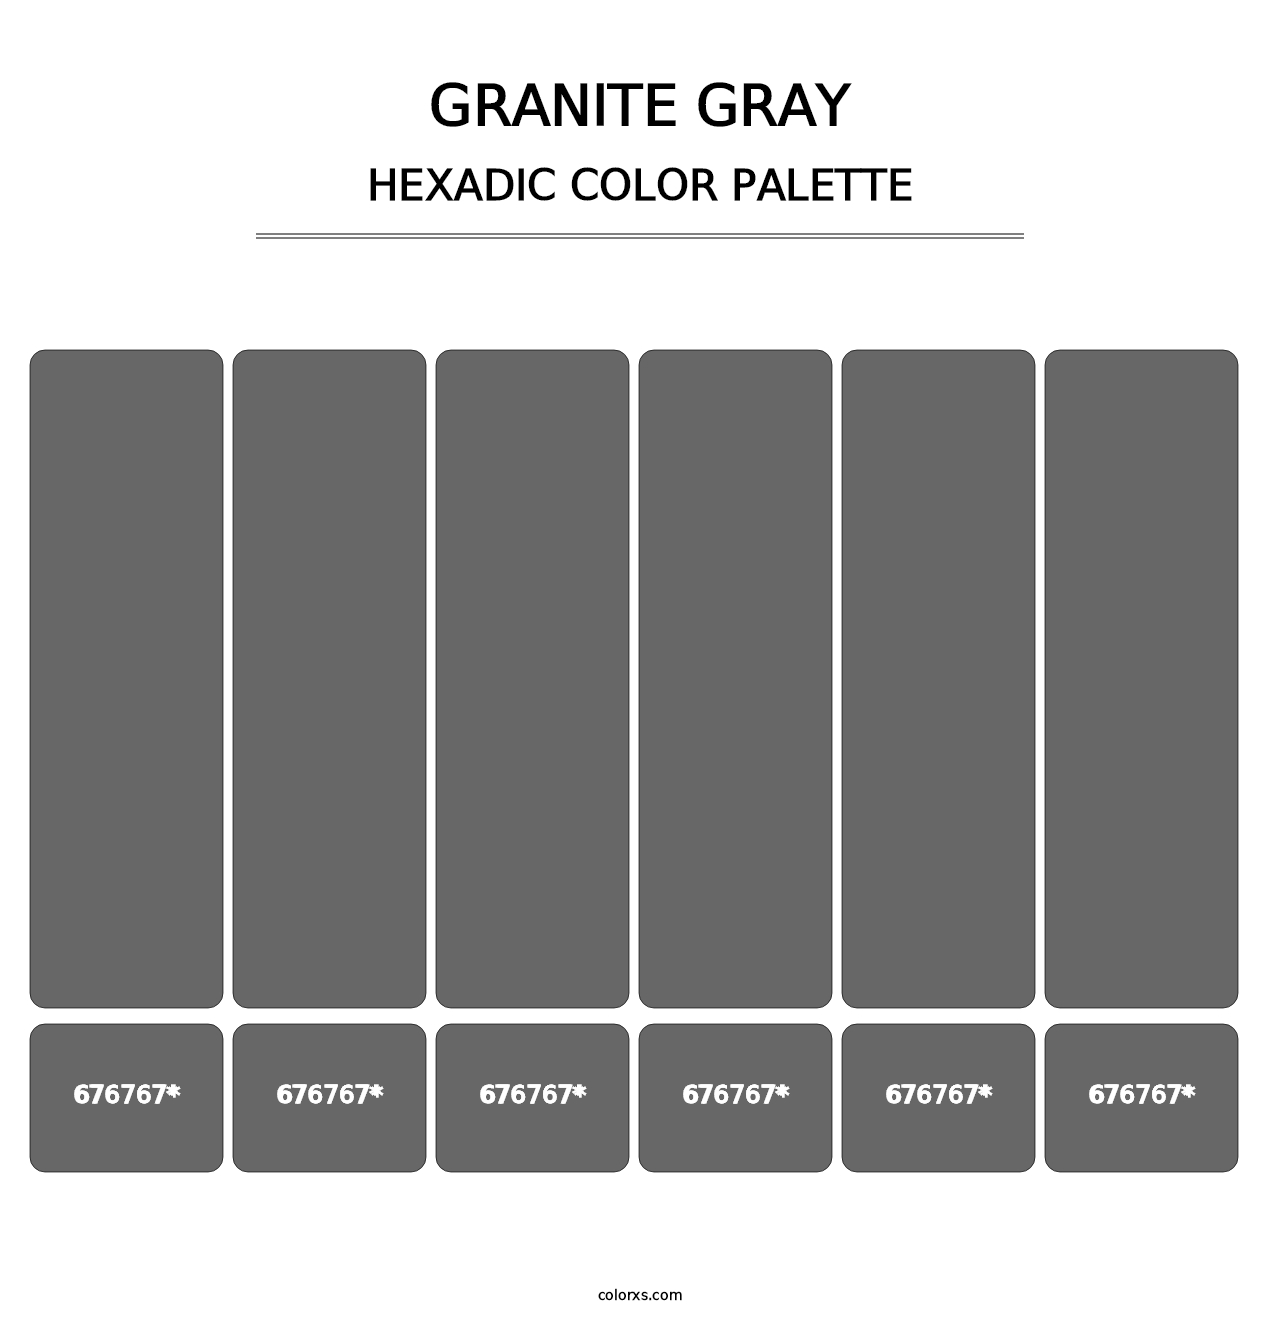 Granite Gray - Hexadic Color Palette